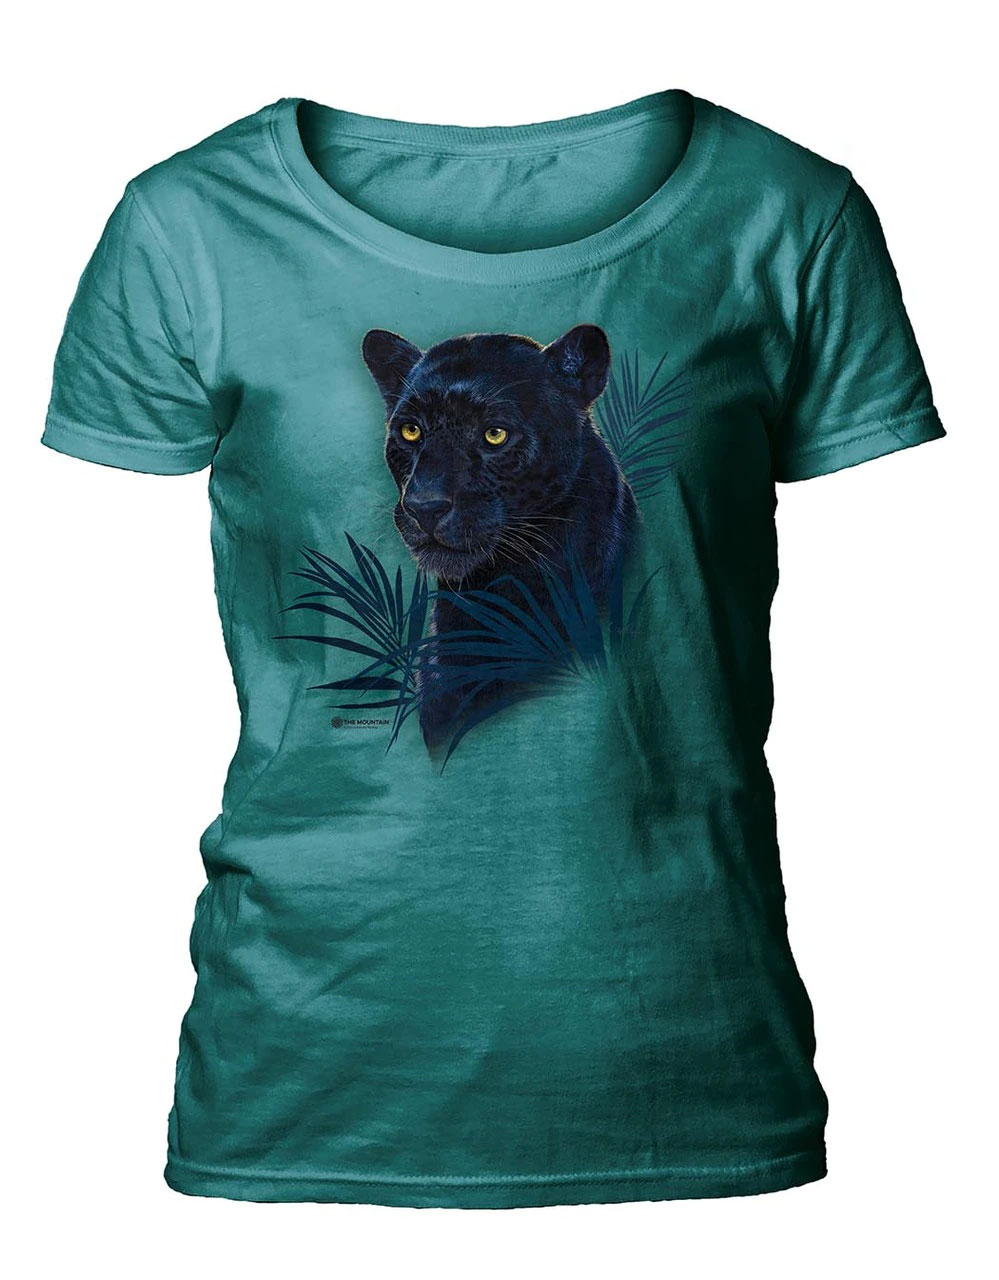 Black Jaguar Women's Scoop T-shirt